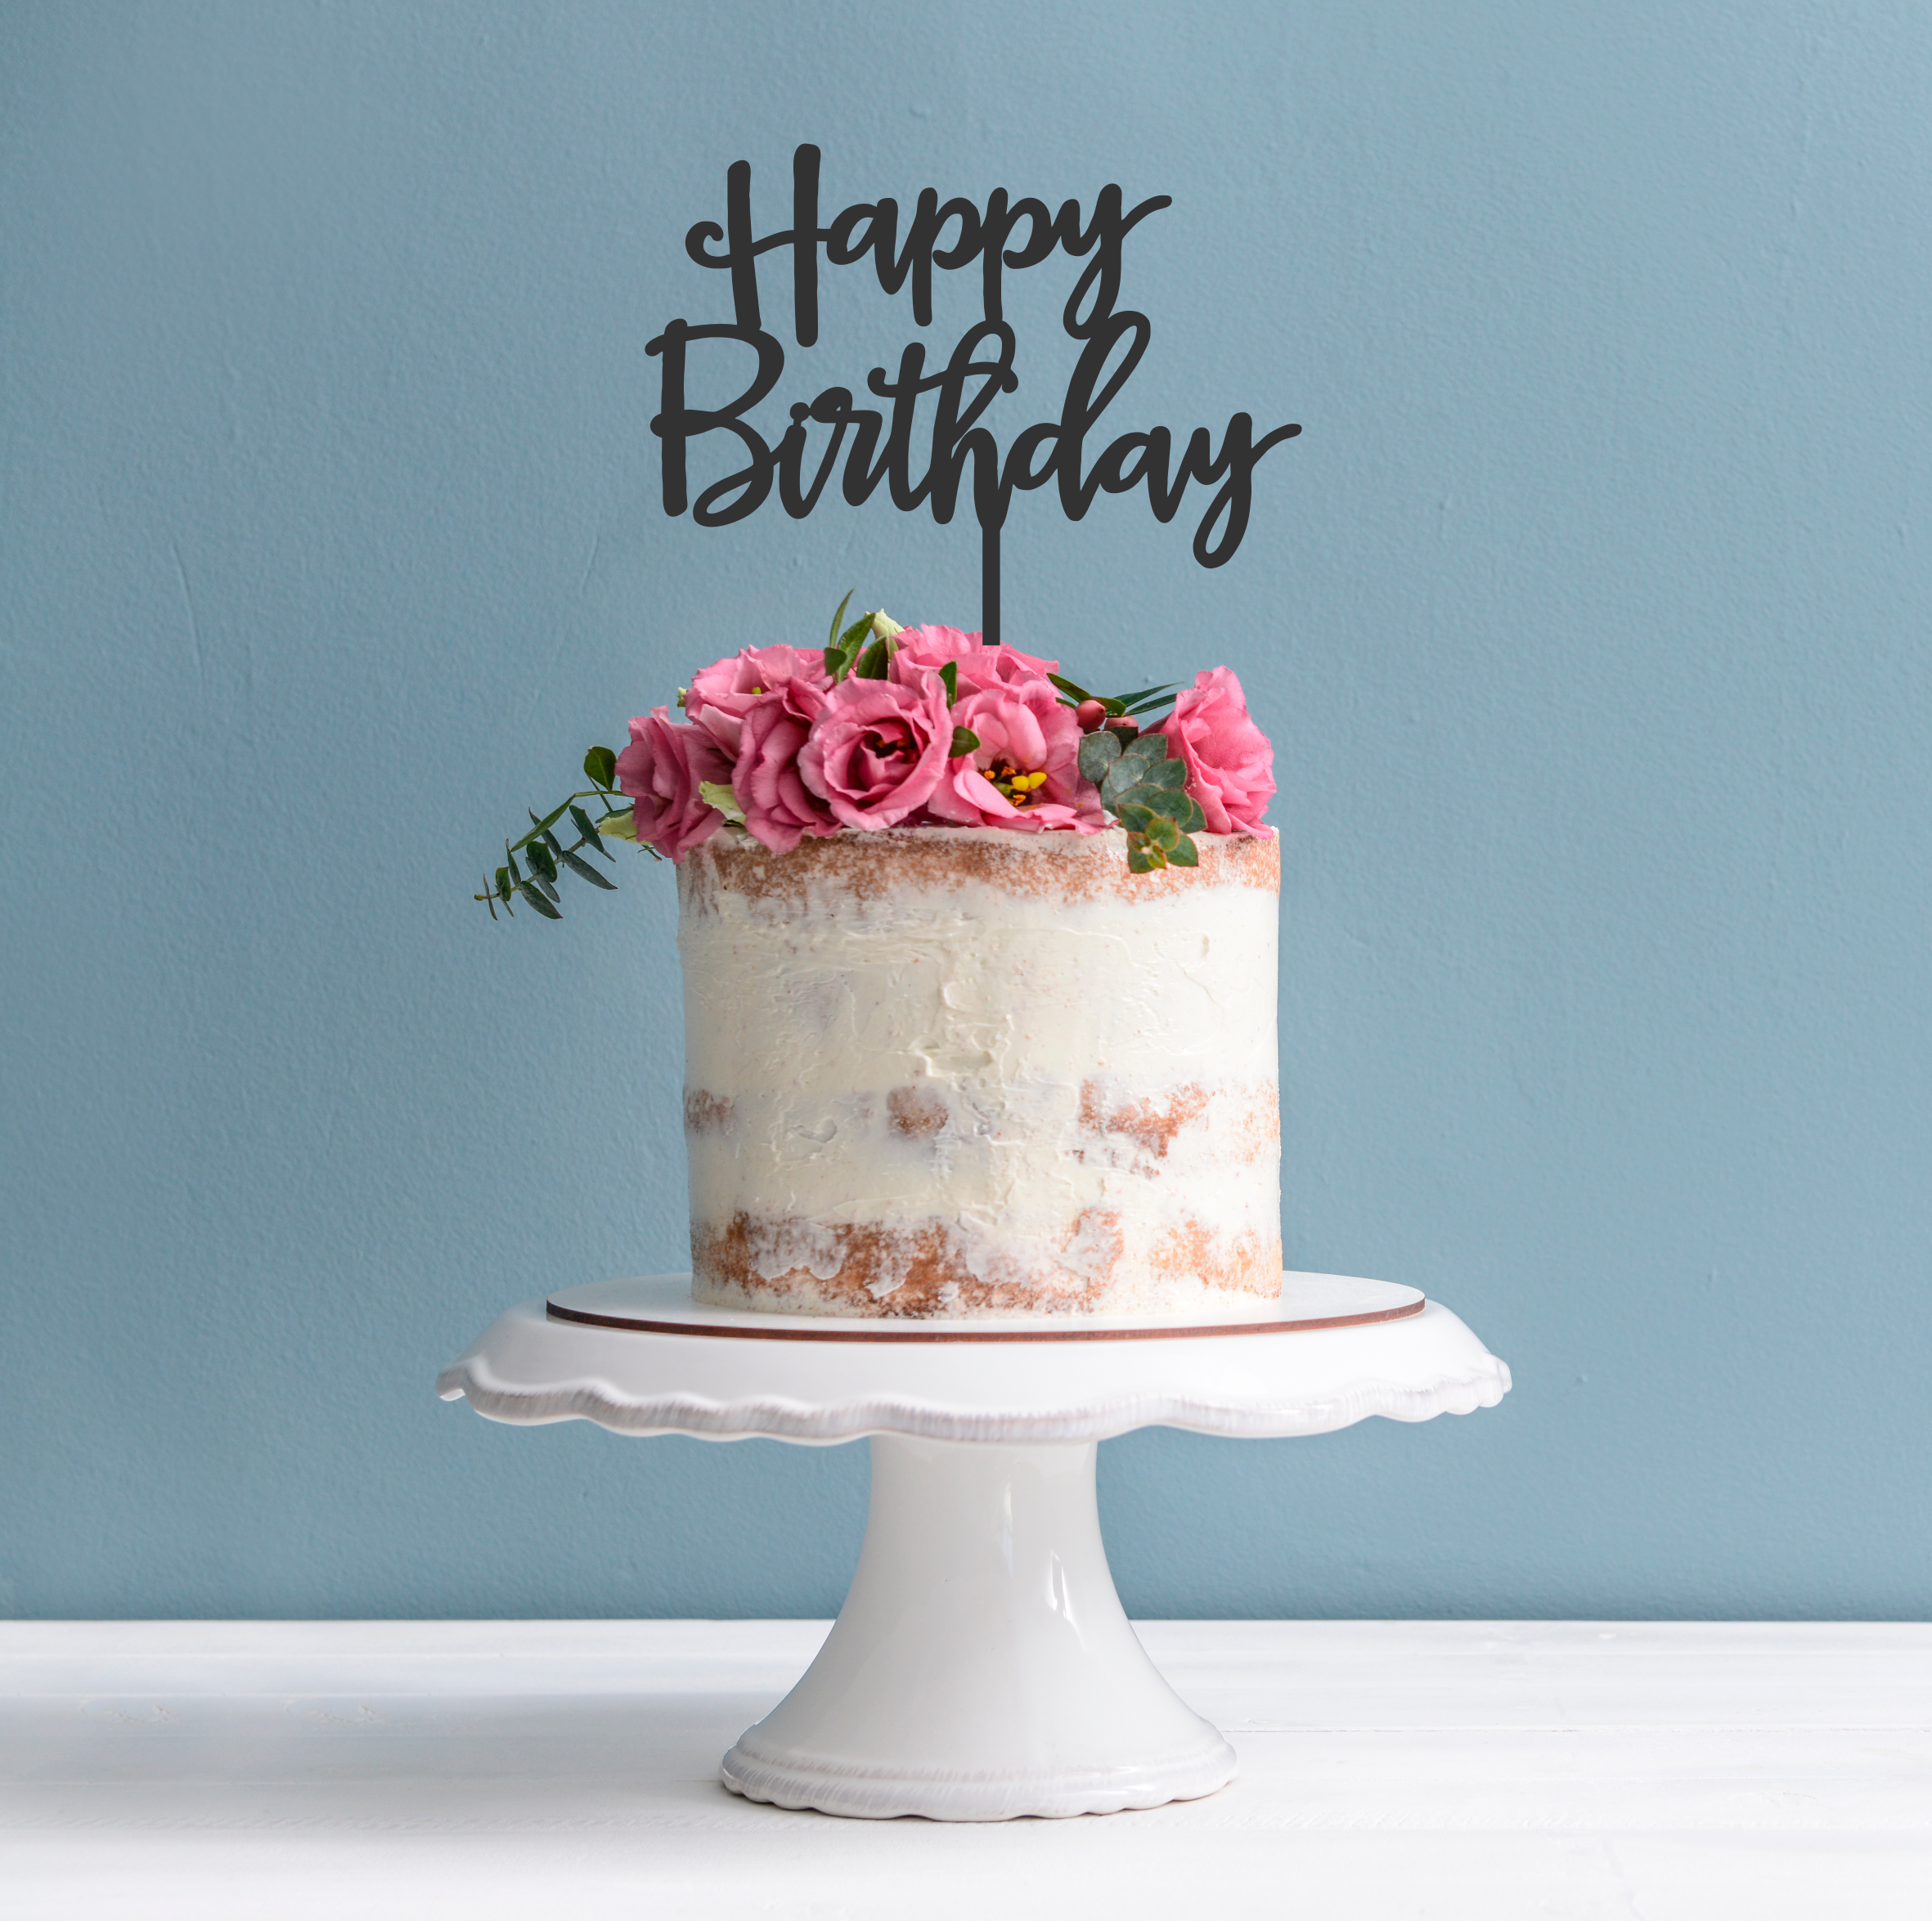 Buy Happy Birthday Cake Topper Online at Best Price In Pakistan